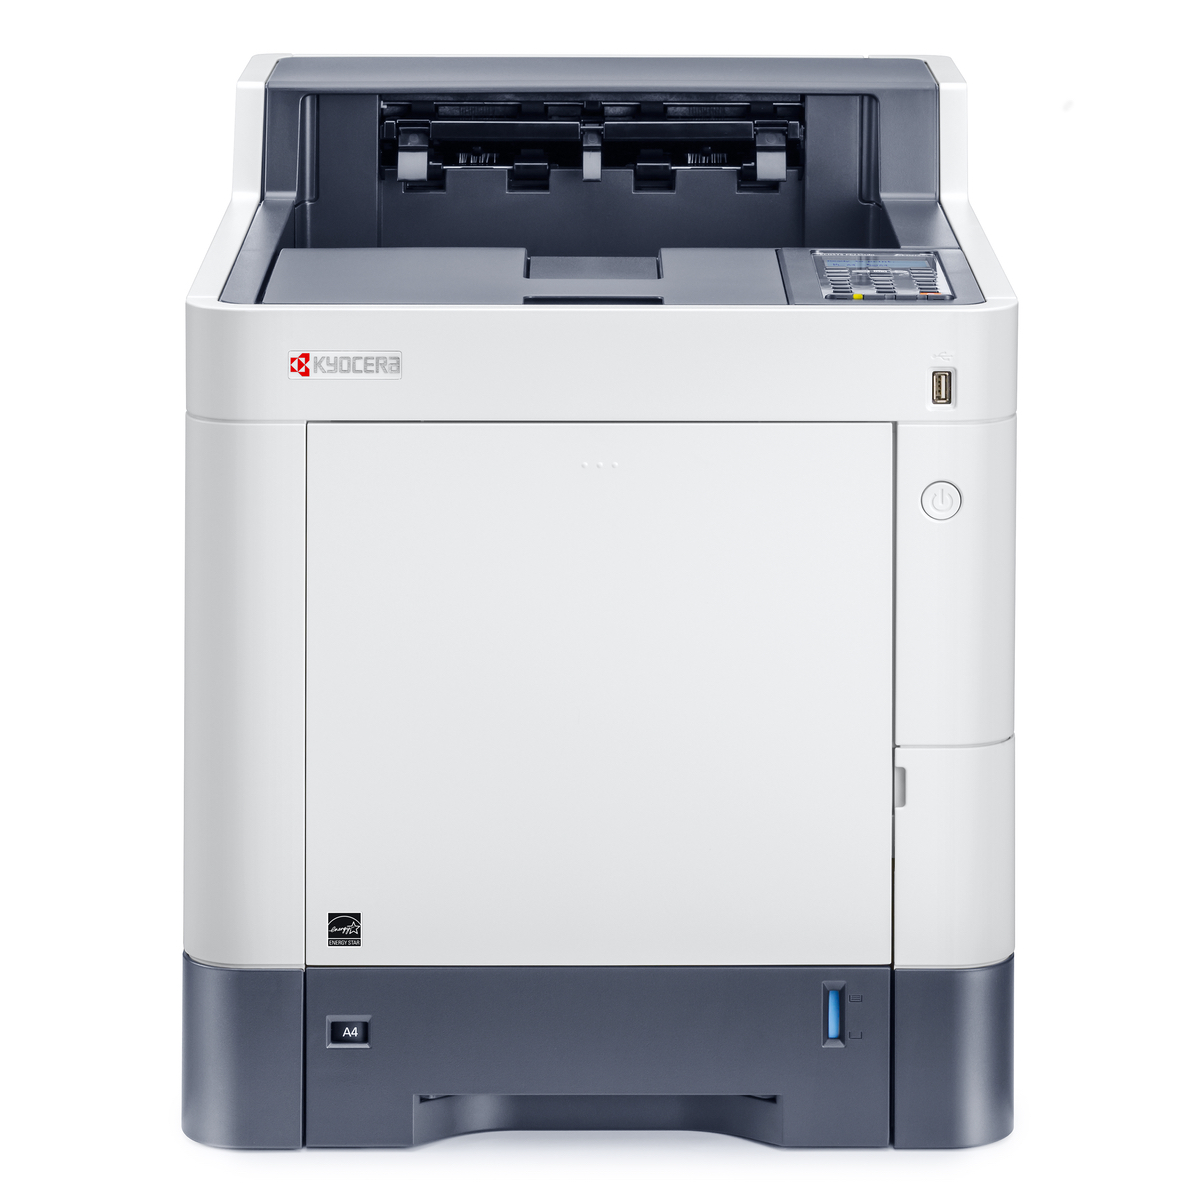 Kyocera Printers:  The Kyocera ECOSYS P6235cdn Printer